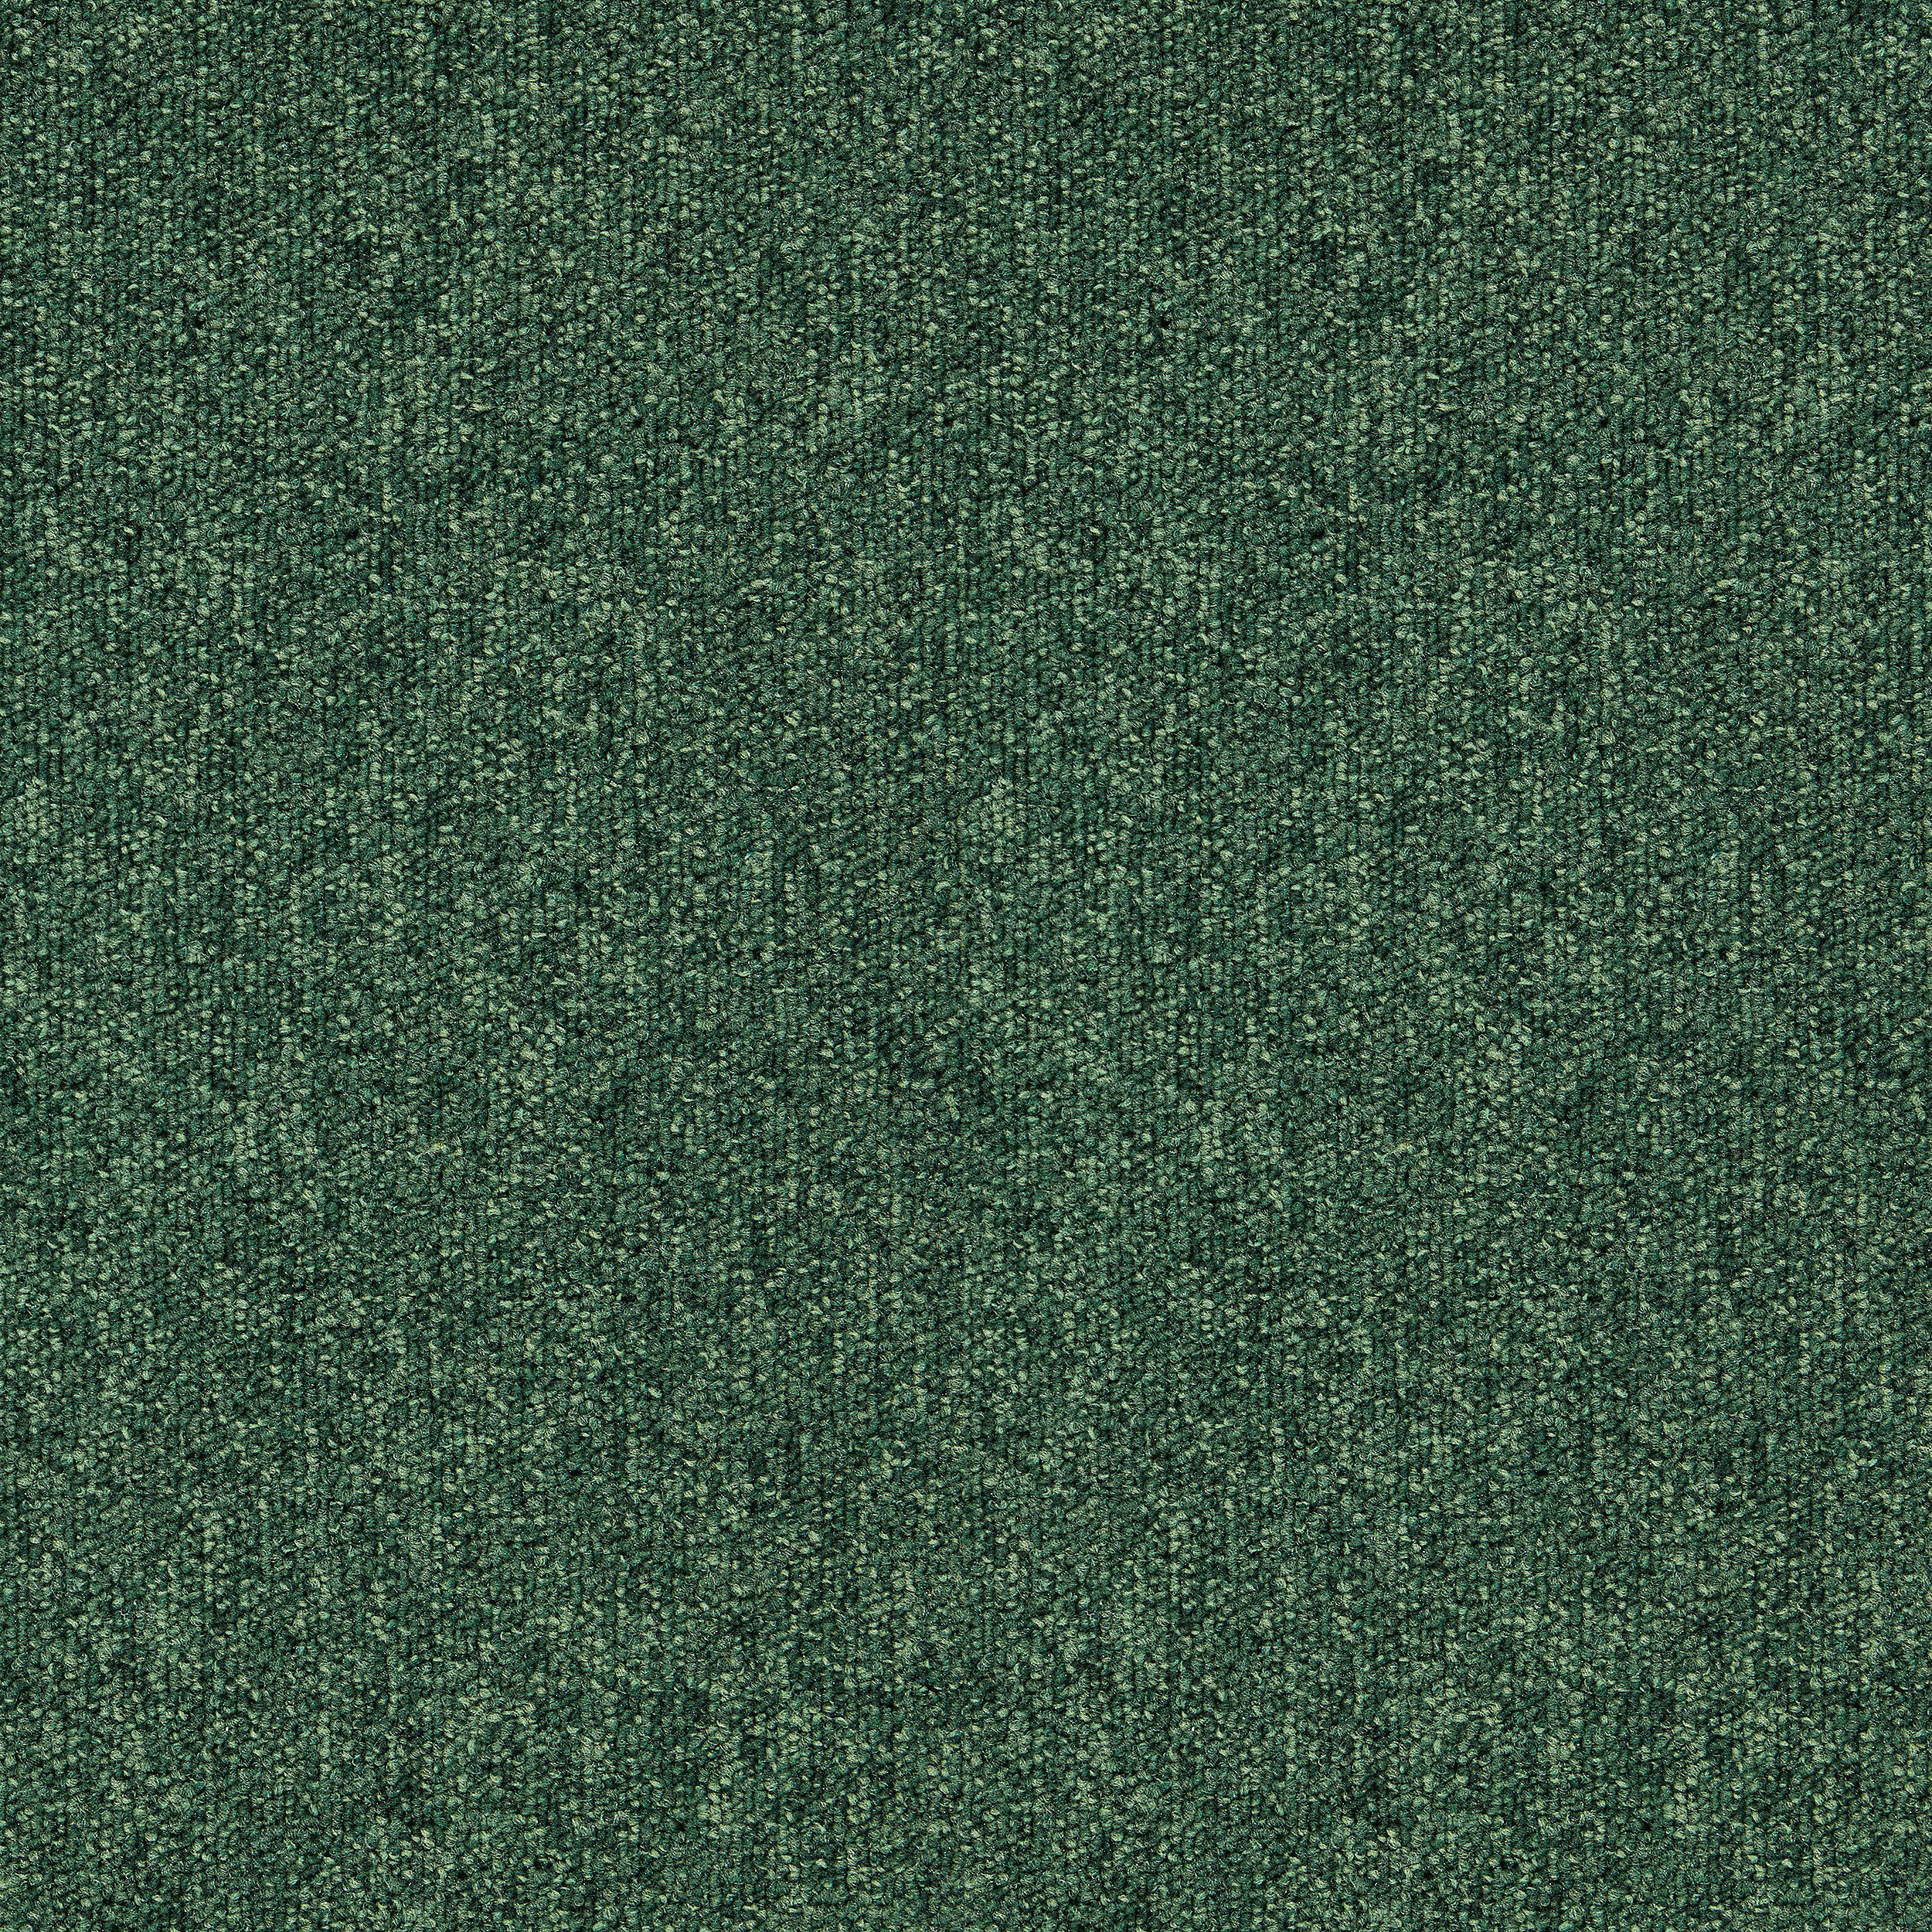 Heuga 727 Carpet Tile In Bottle Green número de imagen 17